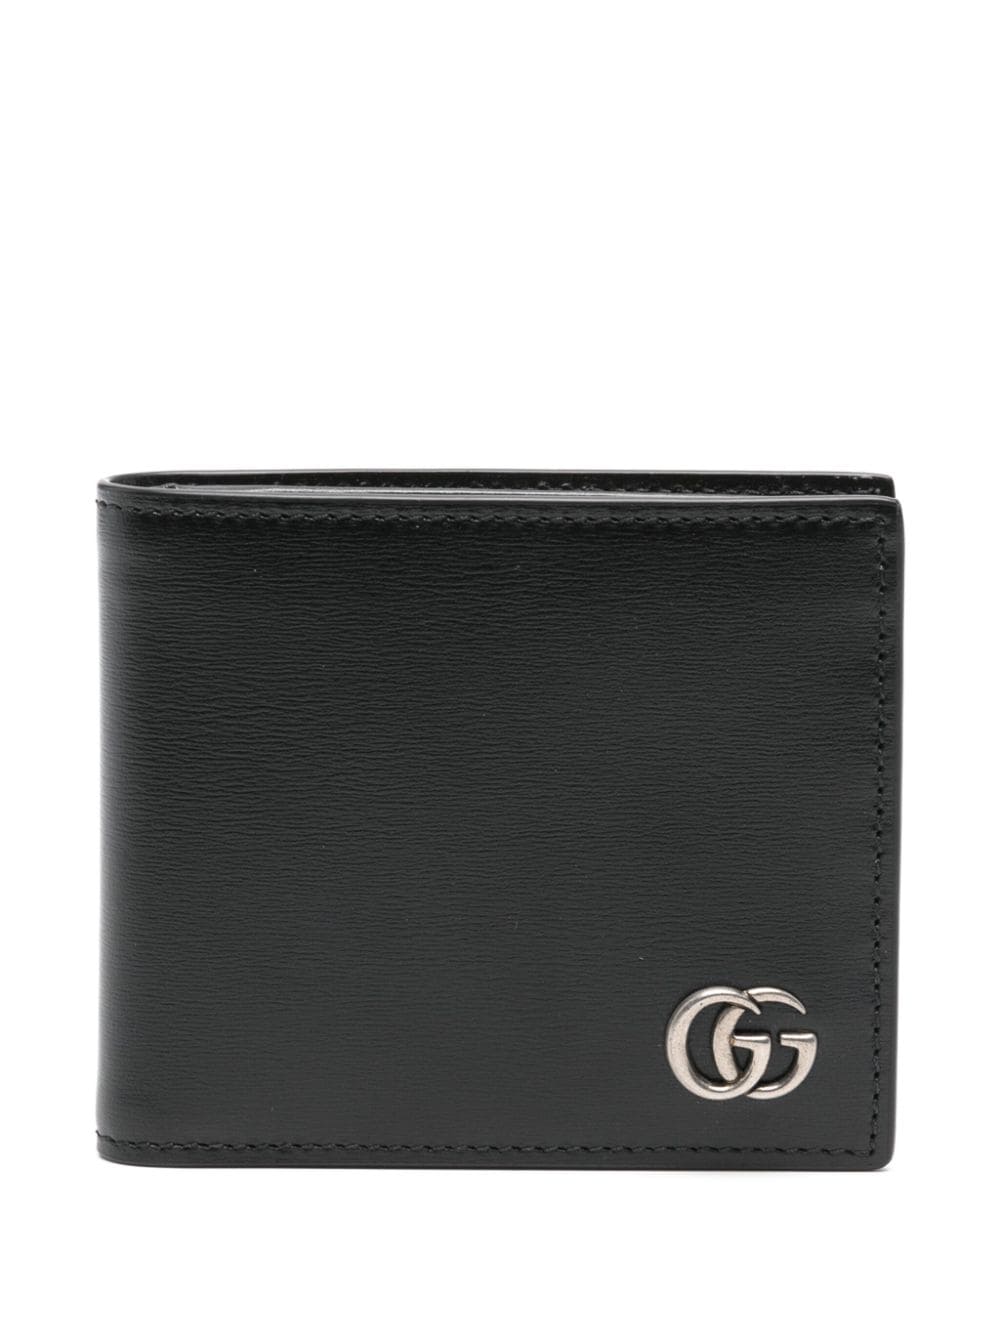 Gucci GG Marmont leather coin wallet - Black von Gucci